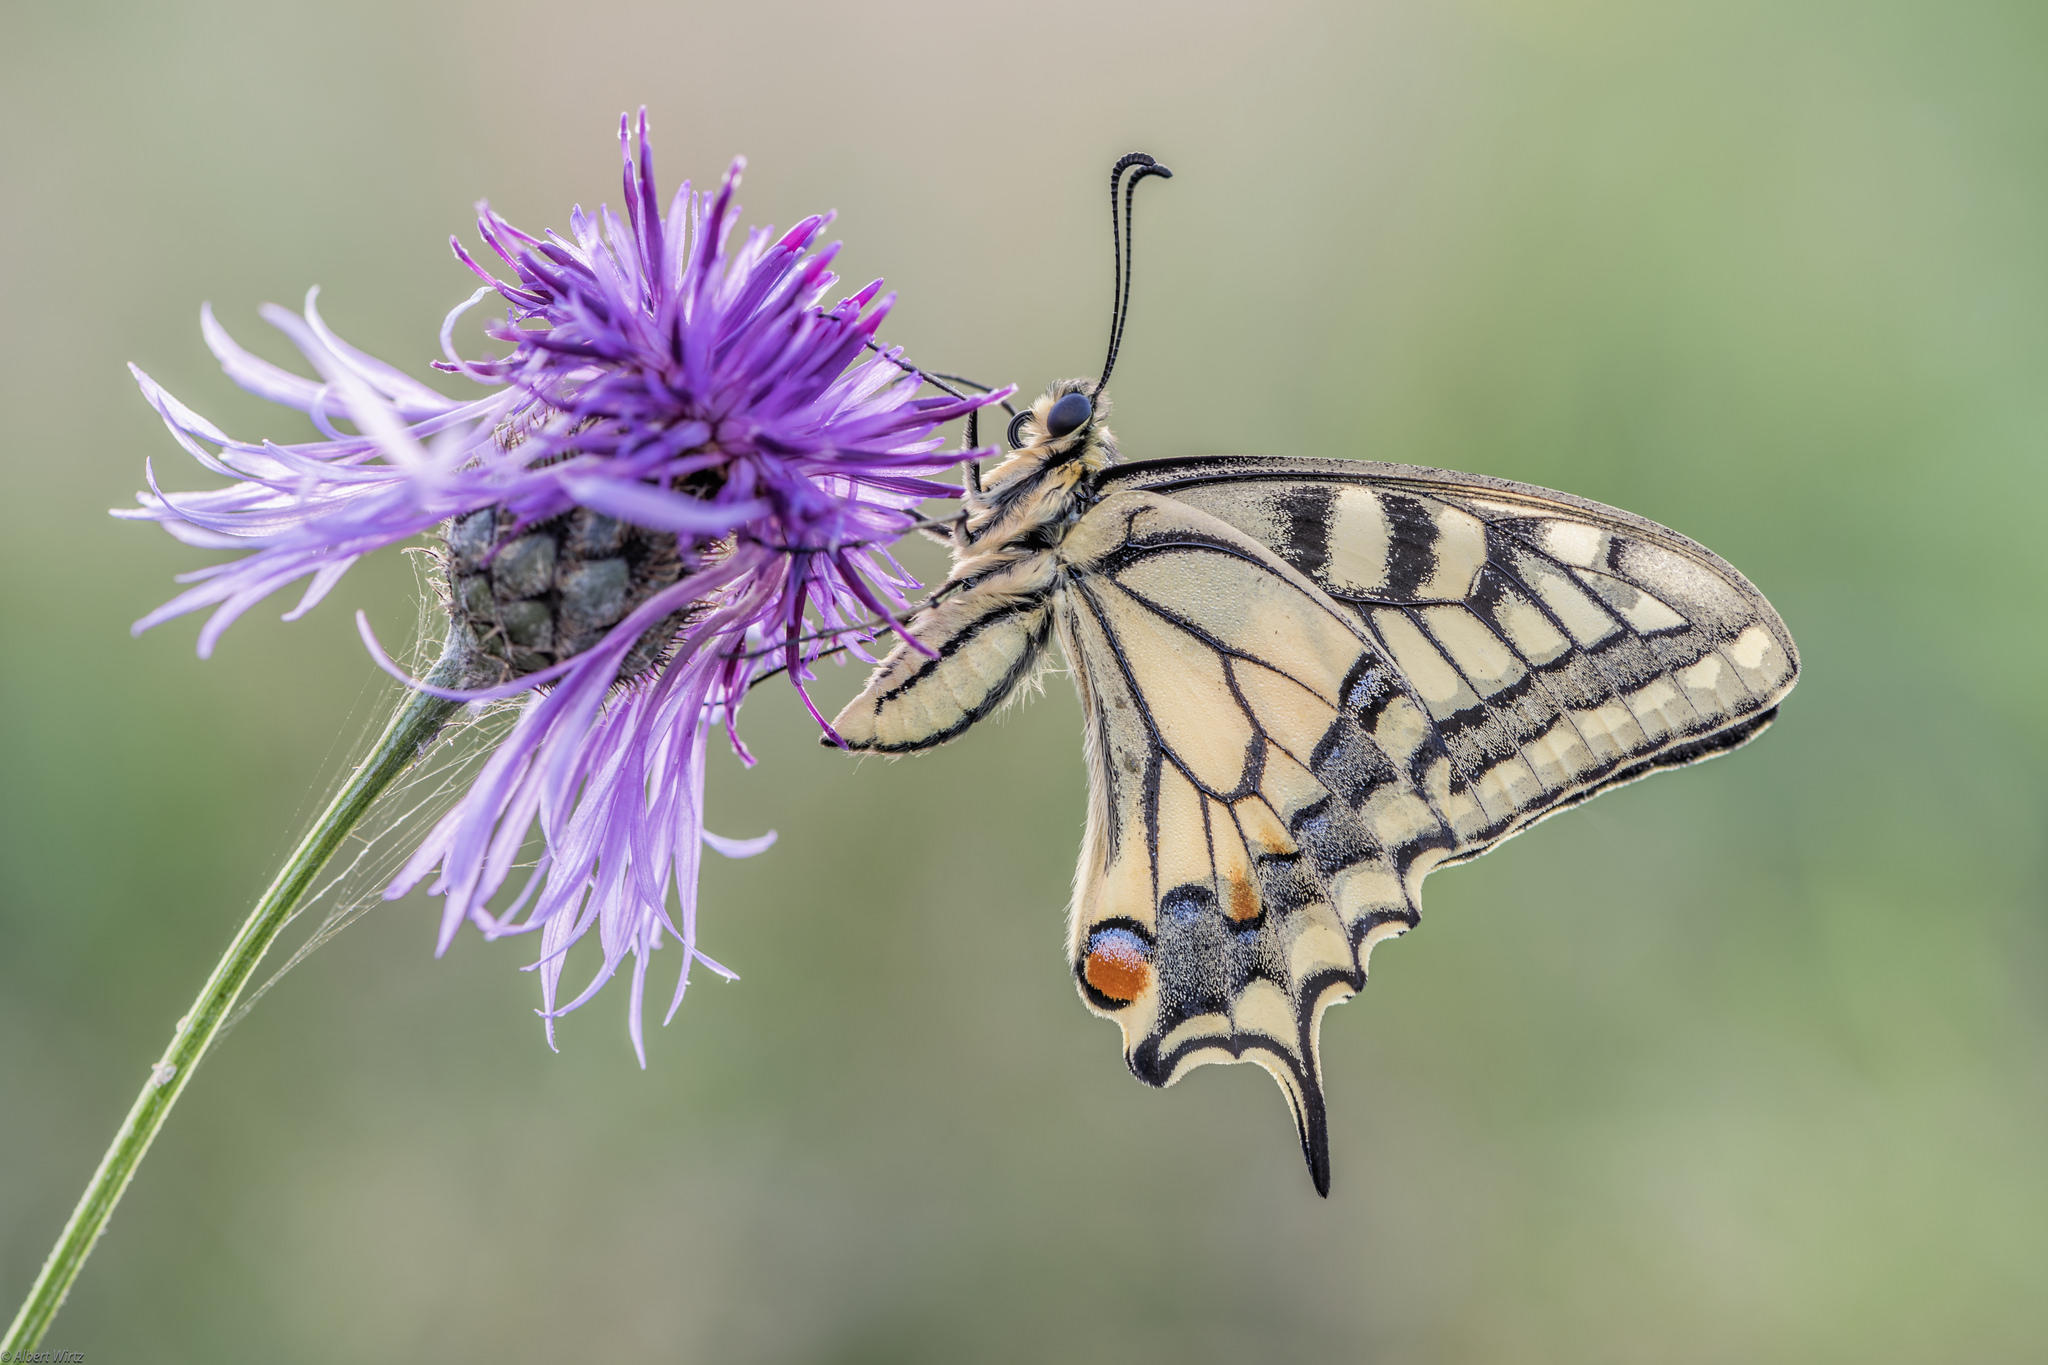 Screensaver butterfly, flower for phone